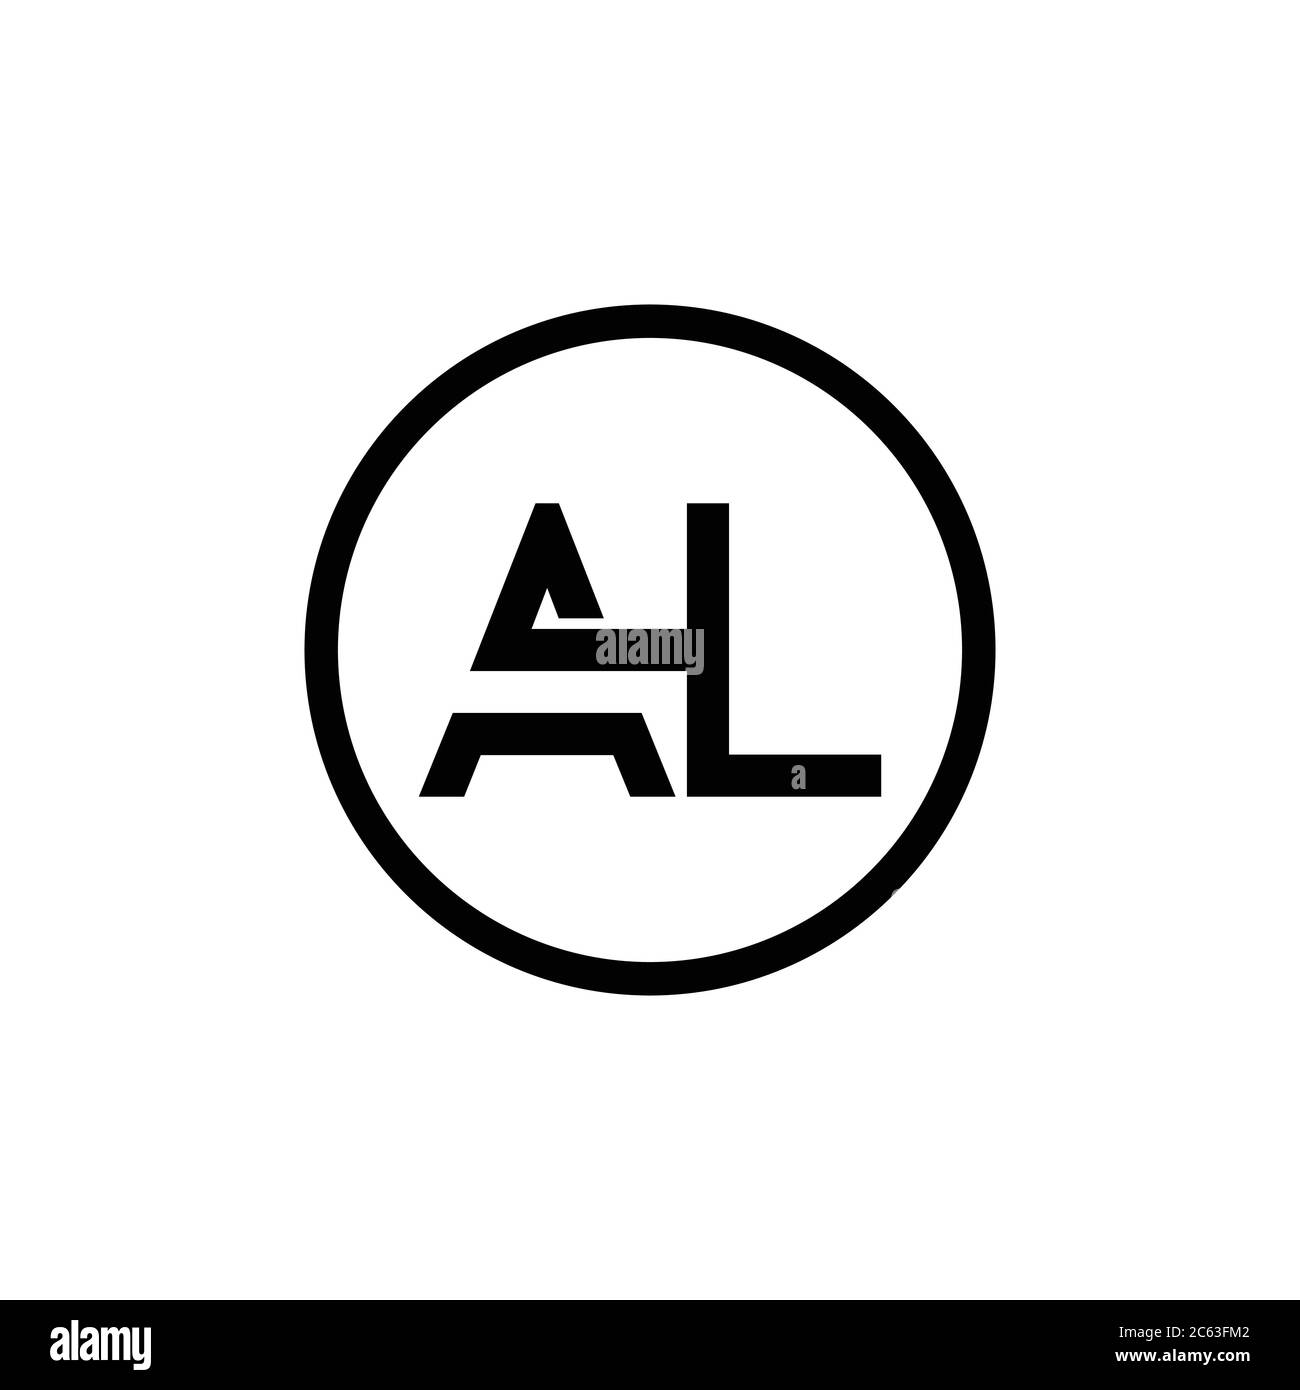 AL Logo Design Business Typography Vector Template. Creative Linked Letter AL Logo Template. AL Font Type Logo Stock Vector